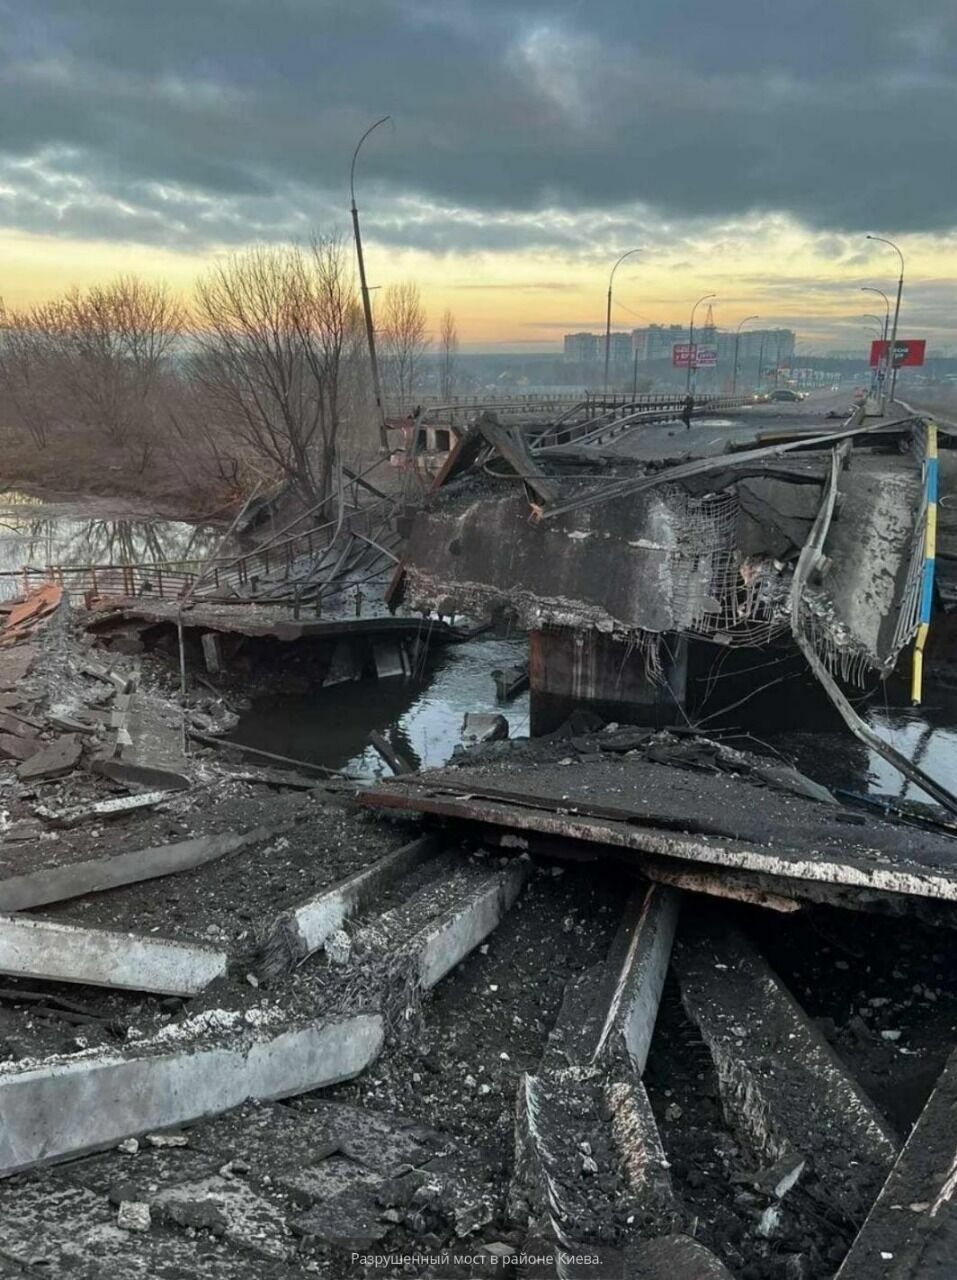 Ukrainian military blew up the bridge on the outskirts of Kiev